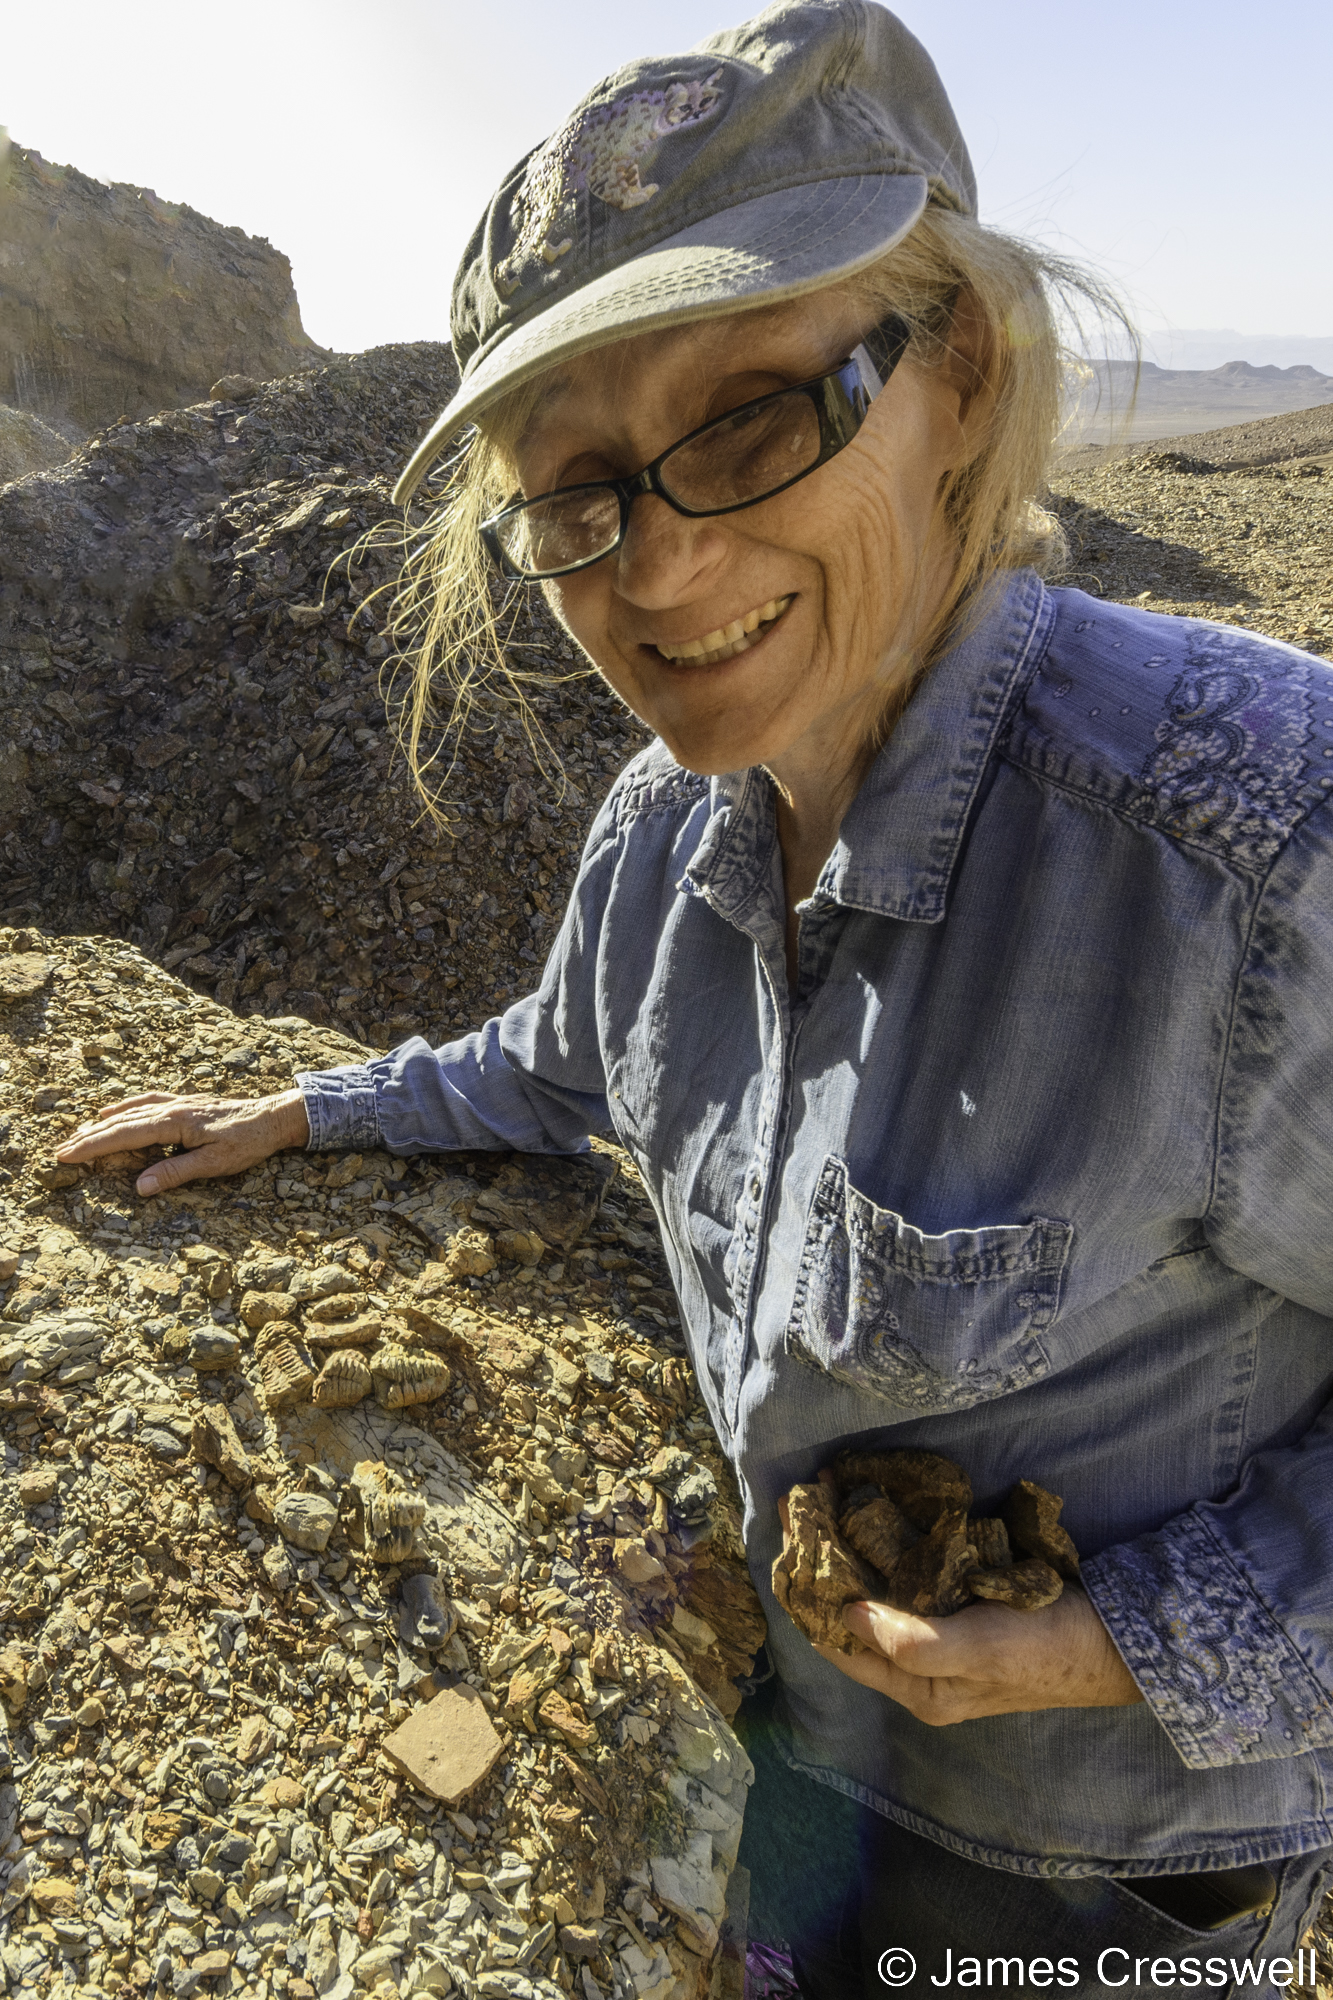 A woman finds trilobite fossils